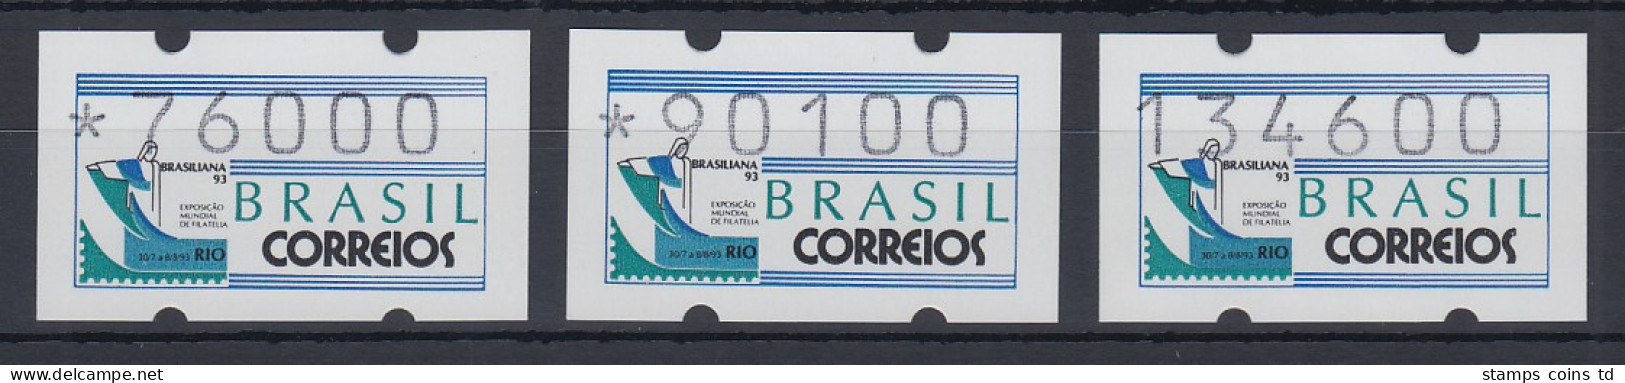 Brasilien Klüssendorf-ATM 1993 BRASILIANA Mi-Nr 5 Satz 76000 - 90100 - 134600 ** - Franking Labels